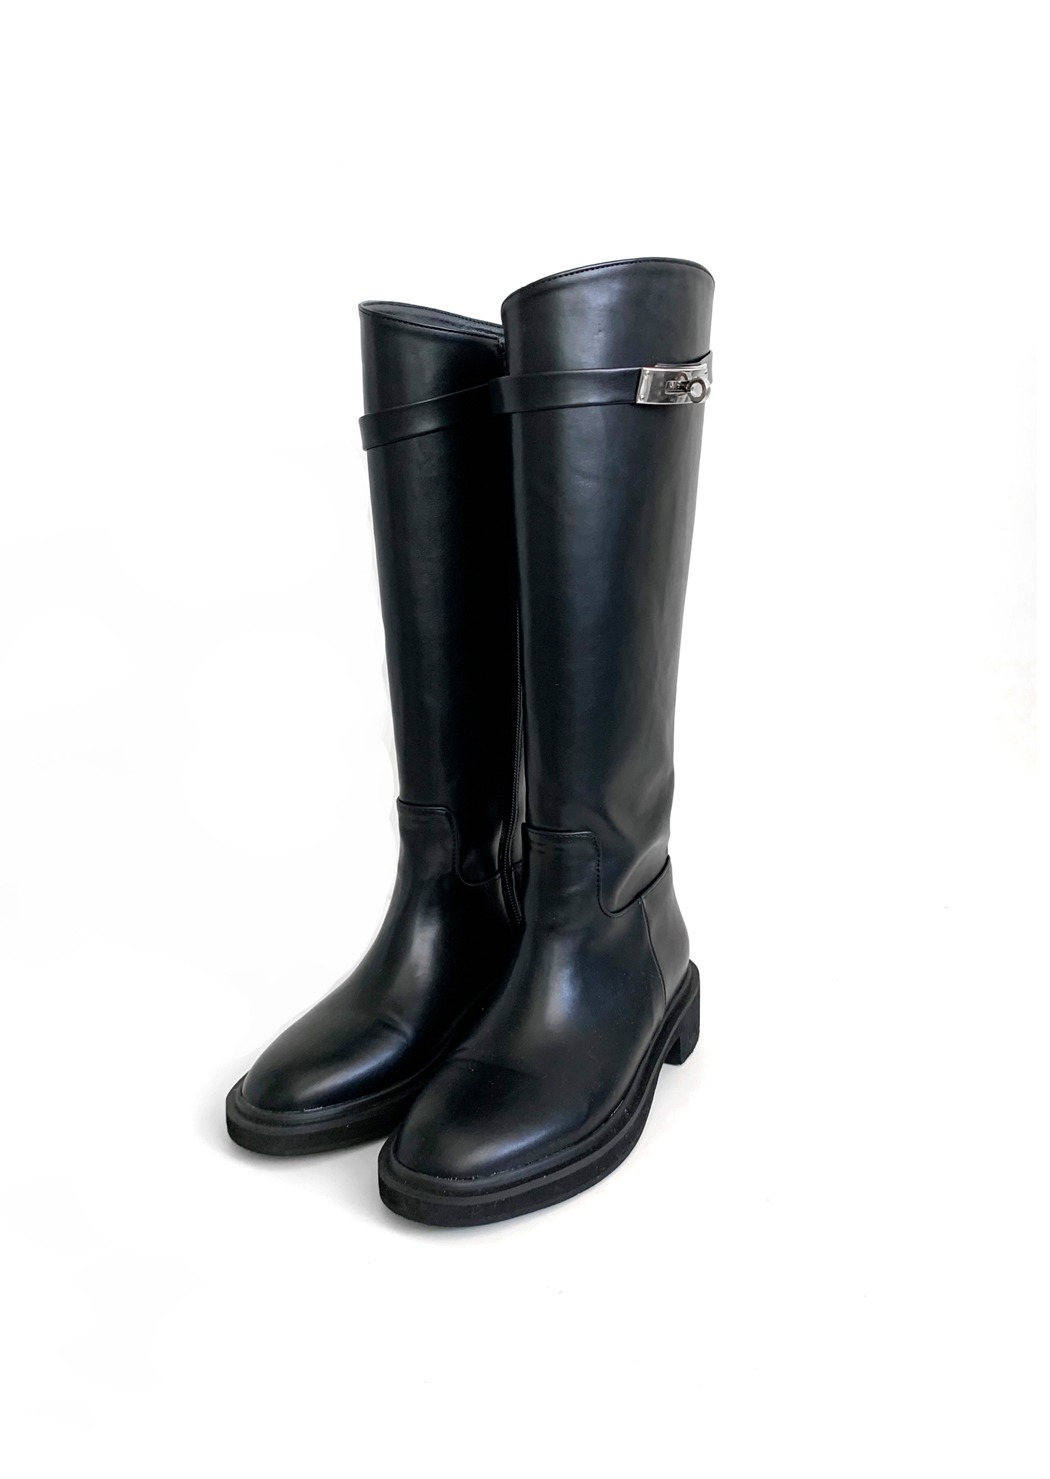 2NDF (투엔디에프)[Select 행사상품] Ferry basic boots - Black /1:1자체제작/네이밍오더/데일리가방/여성가방/핸드백/토트백